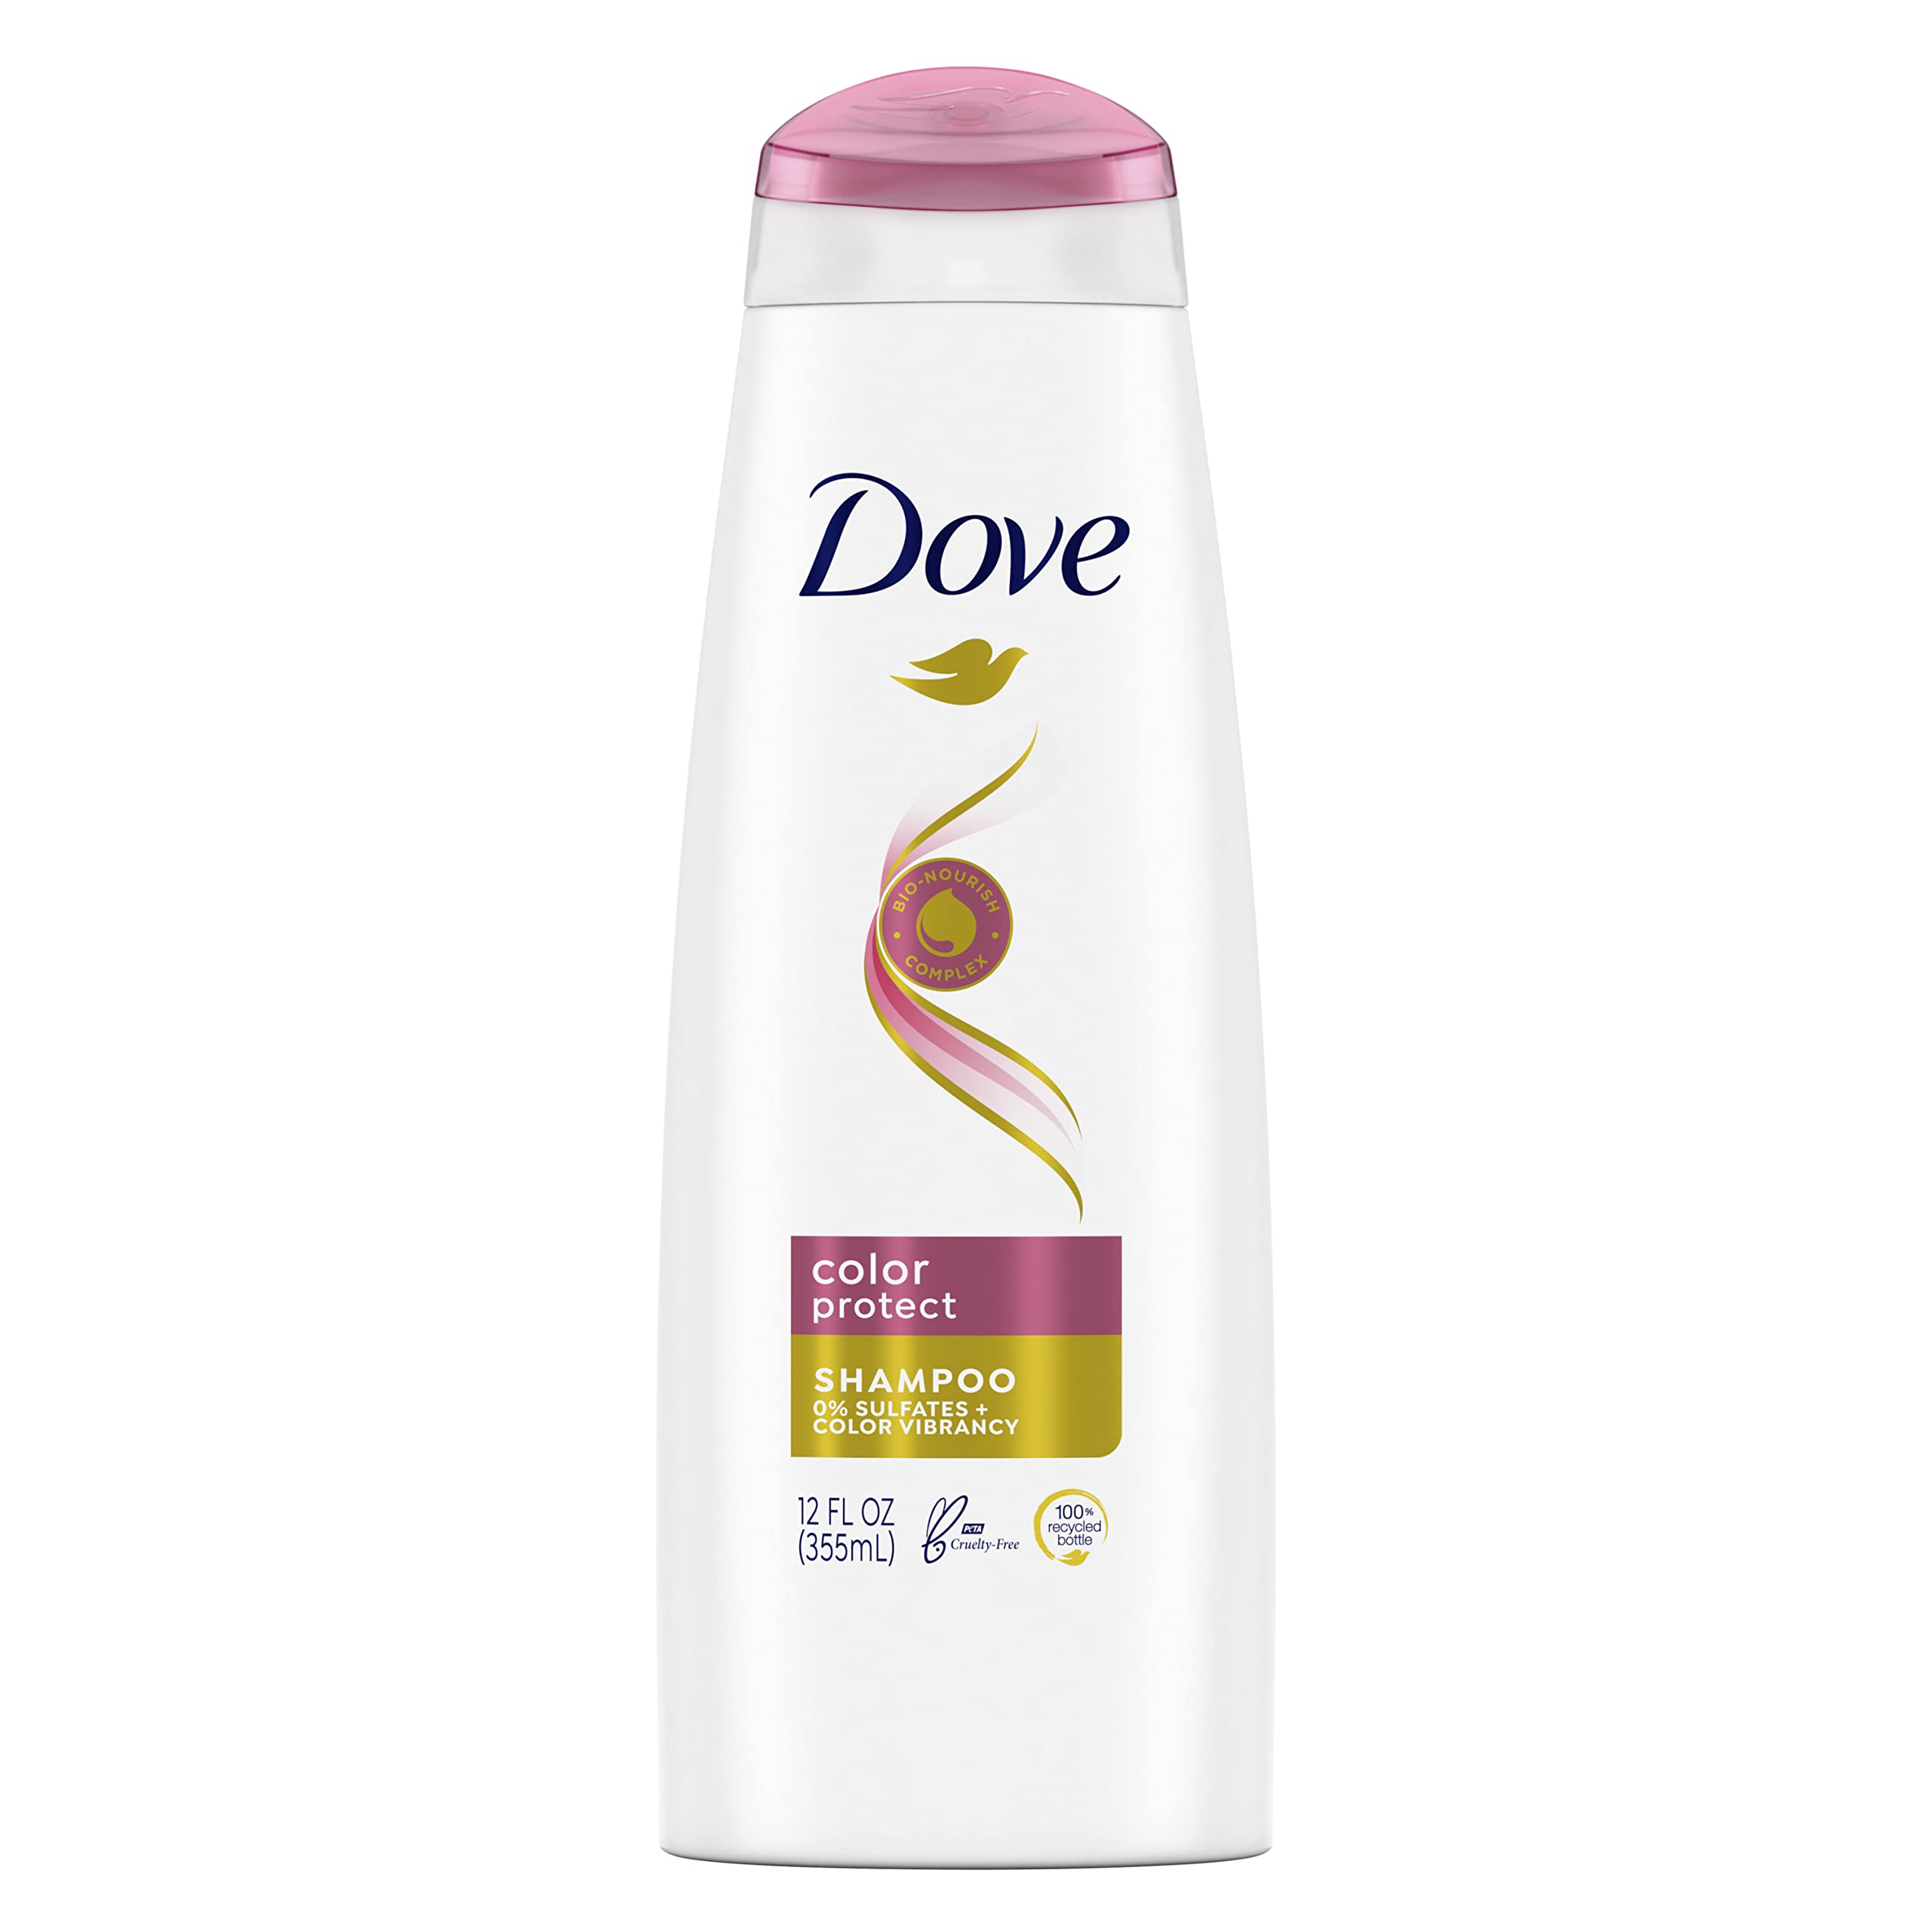 Wholesale dove shampoo